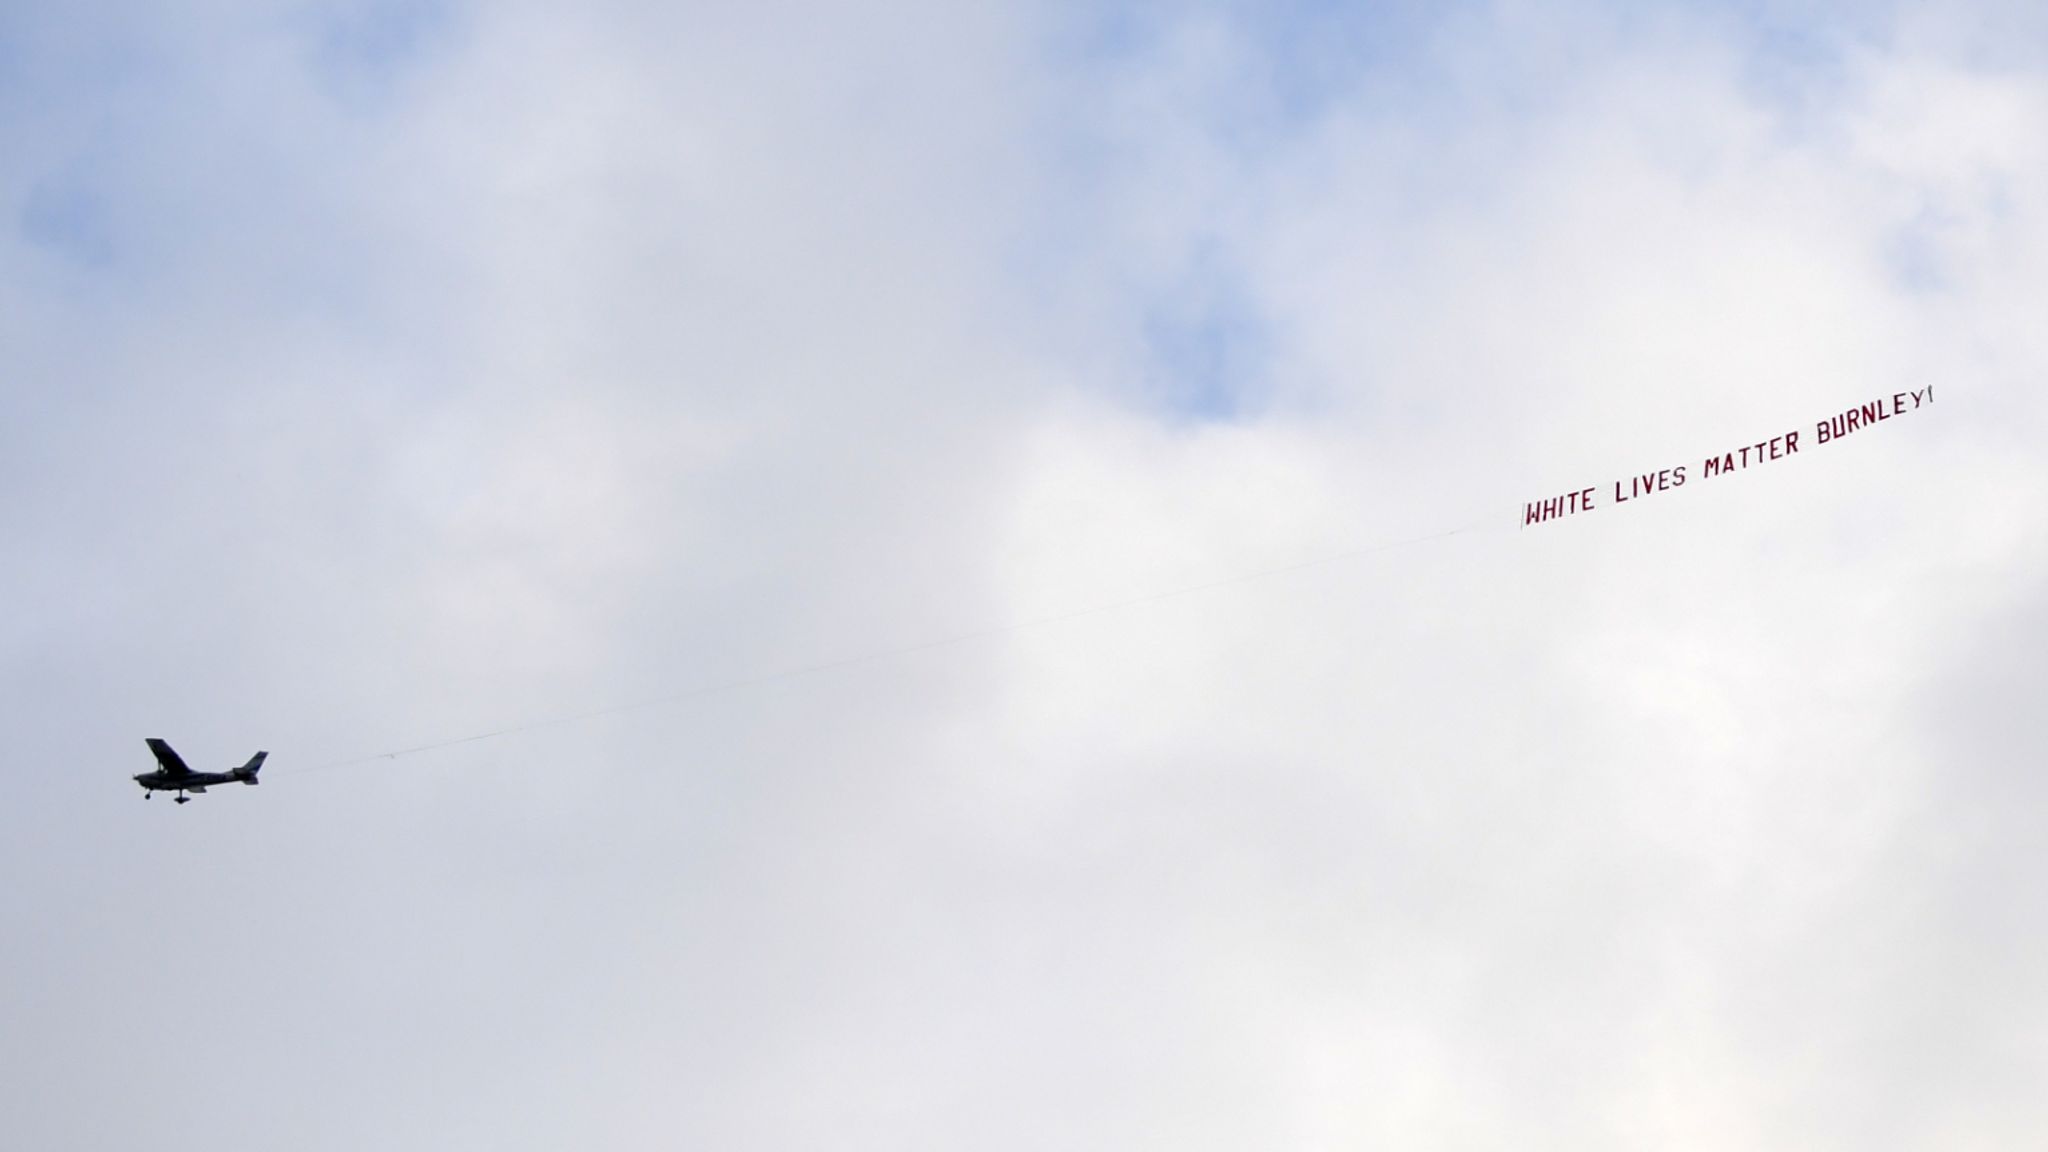 Company That Ran White Lives Matter Burnley Banner Flight Faces